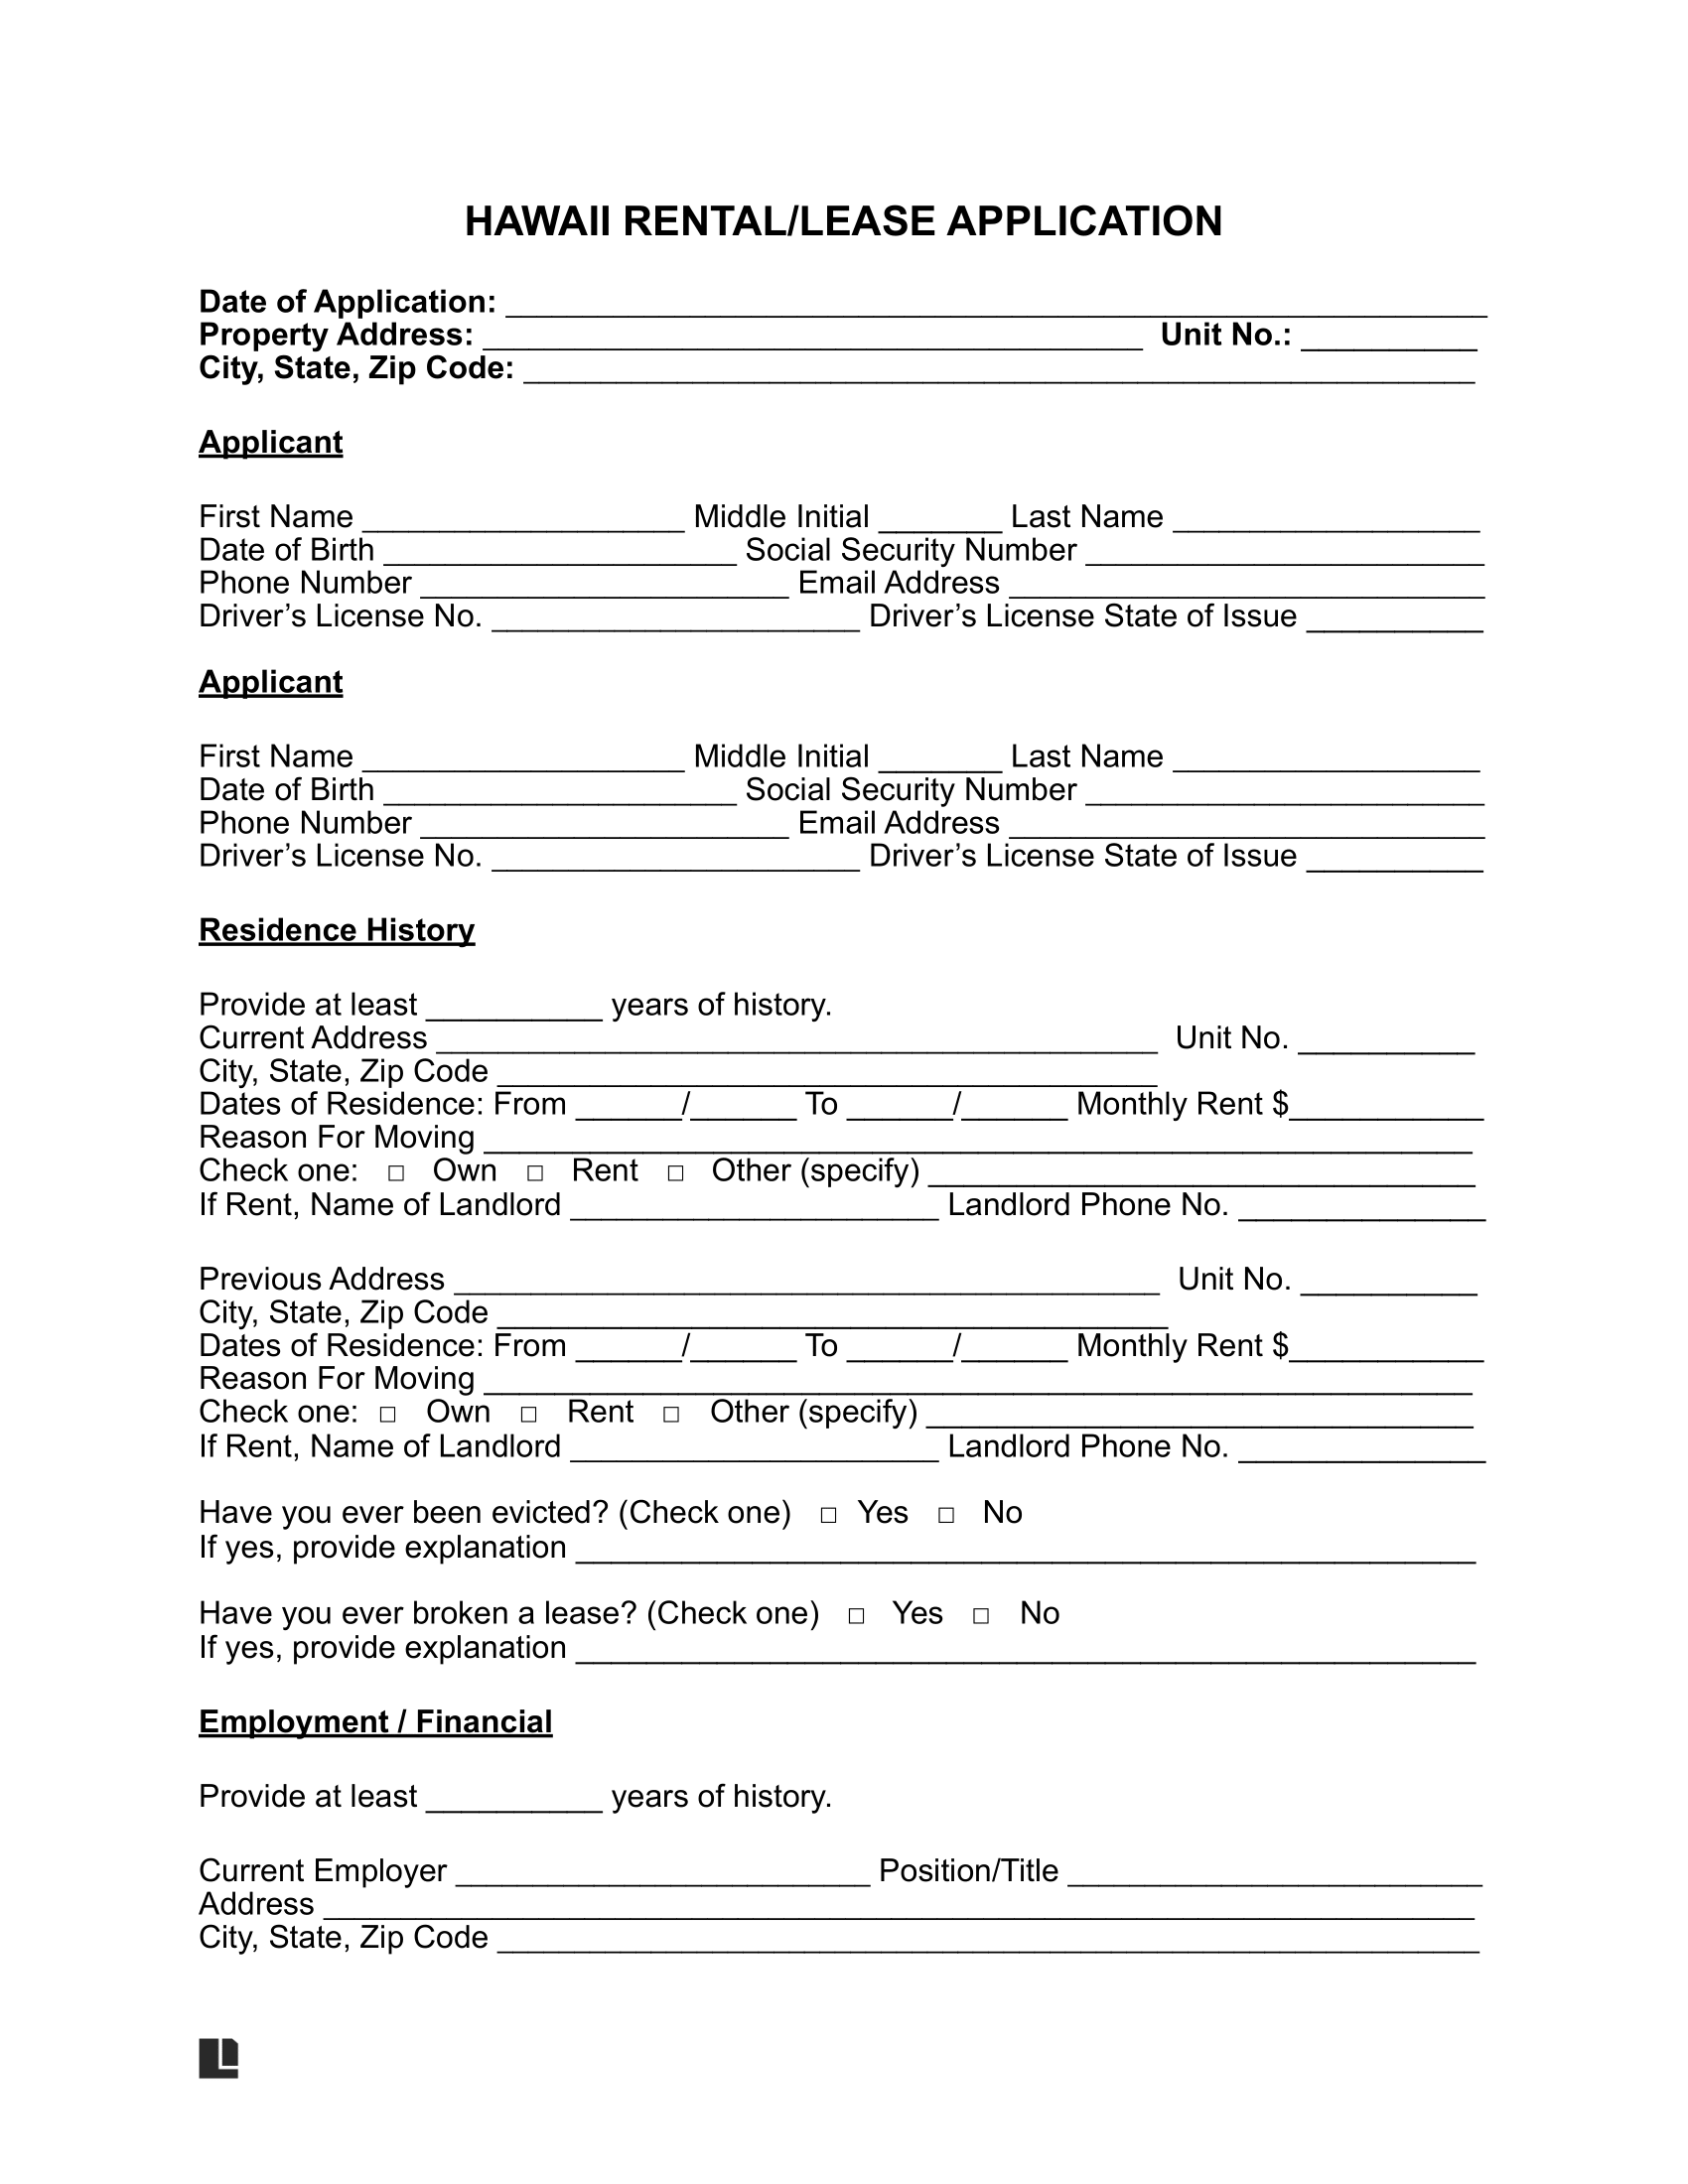 Hawaii Rental Application Form